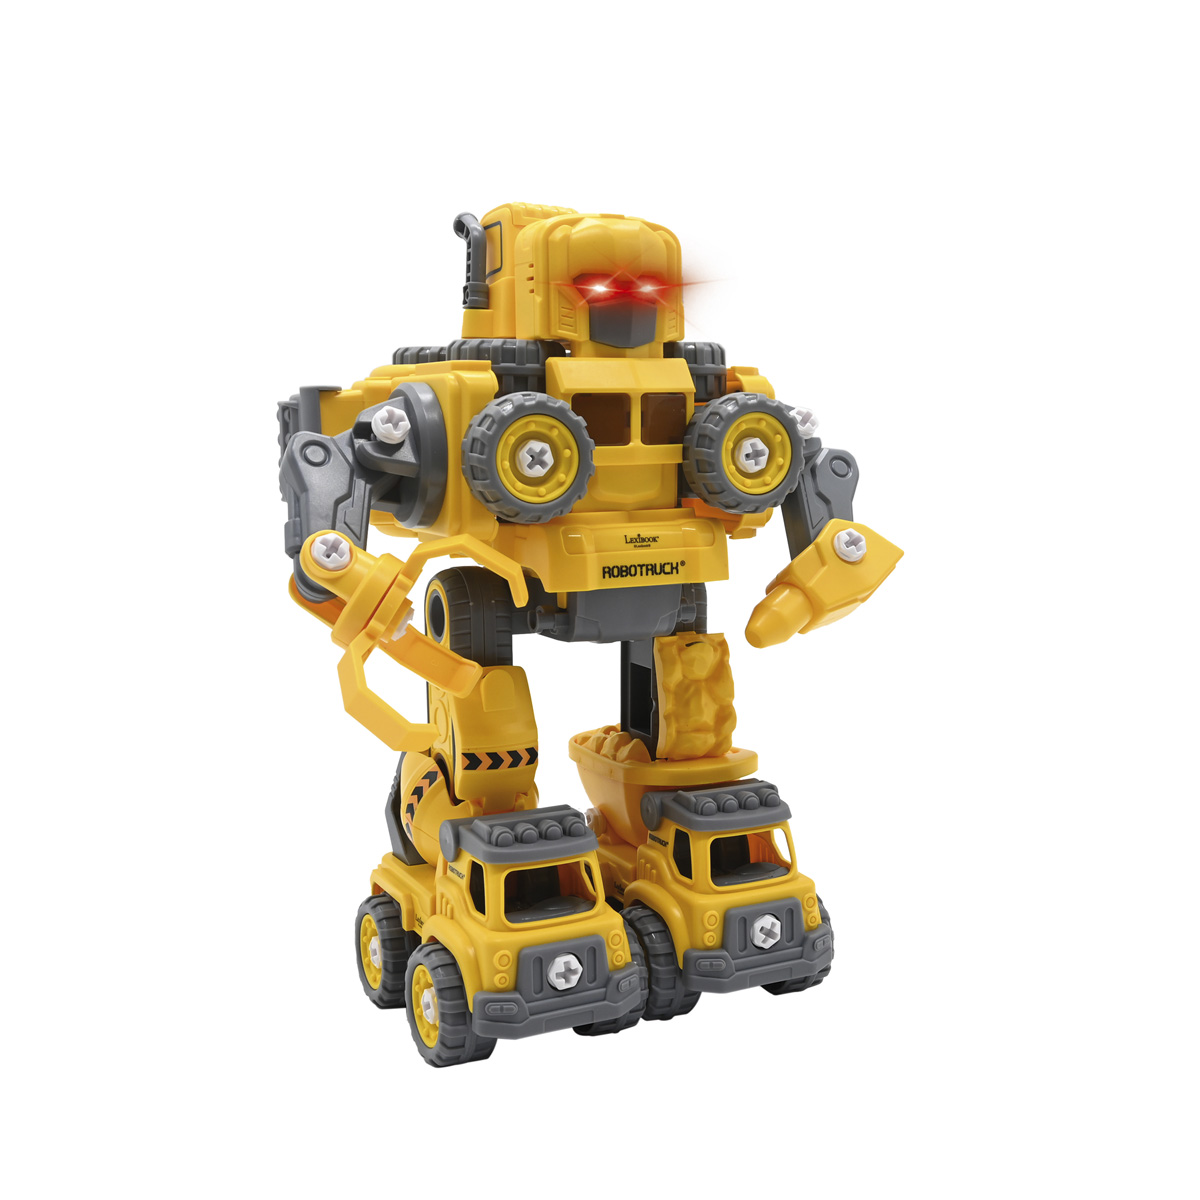 LEXIBOOK ROBOTRUCK 5 in 1 Experimentierkasten, Roboter Bauset für 5 1 - Baufahrzeuge bsw Gelb/Grau Roboter